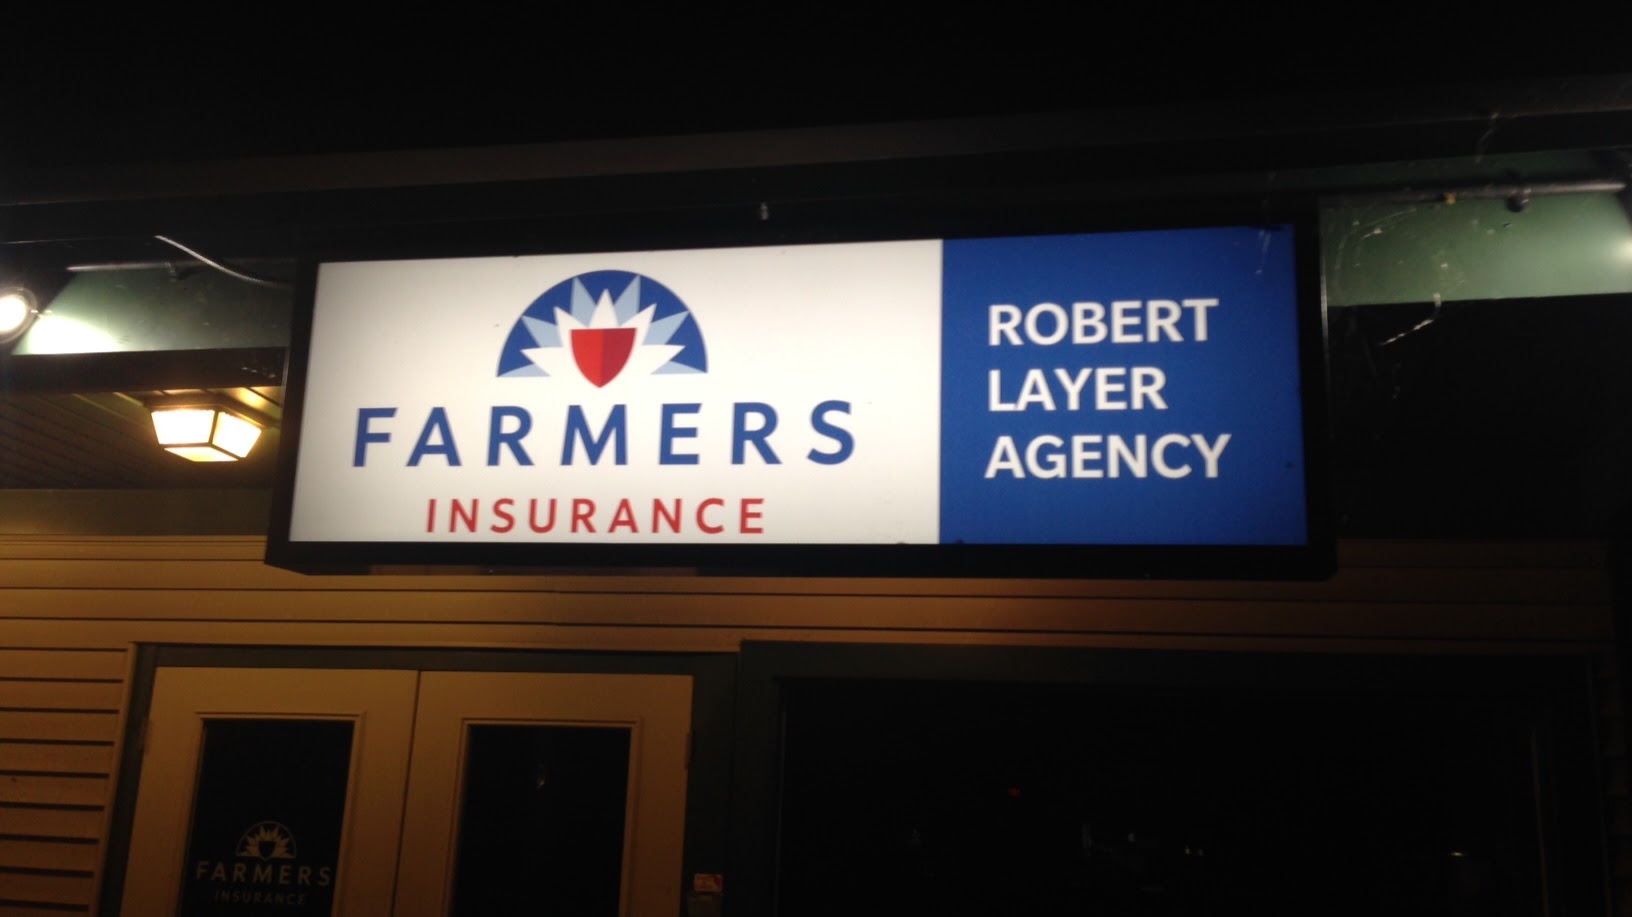 Farmers Insurance - Robert Layer